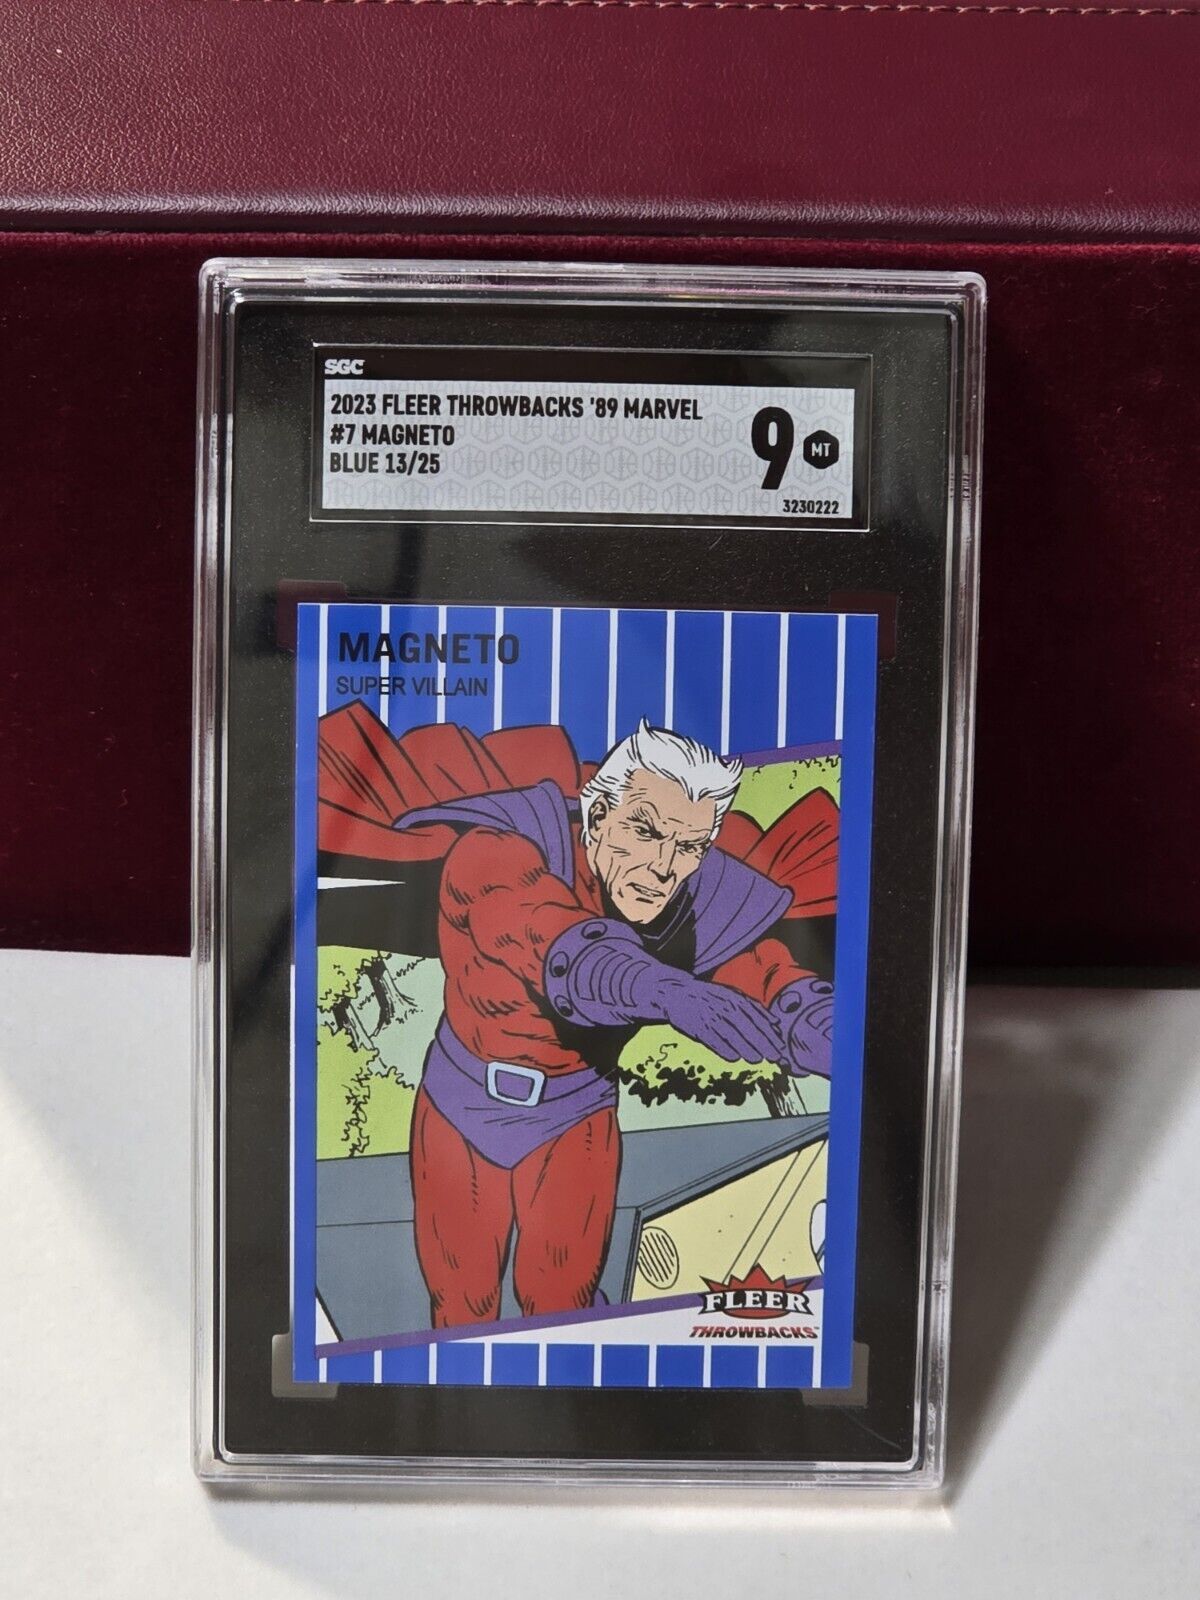 2023 Fleer Throwbacks '89 Marvel Edition Blue /25 Card Magneto #7 SGC 9 Mint